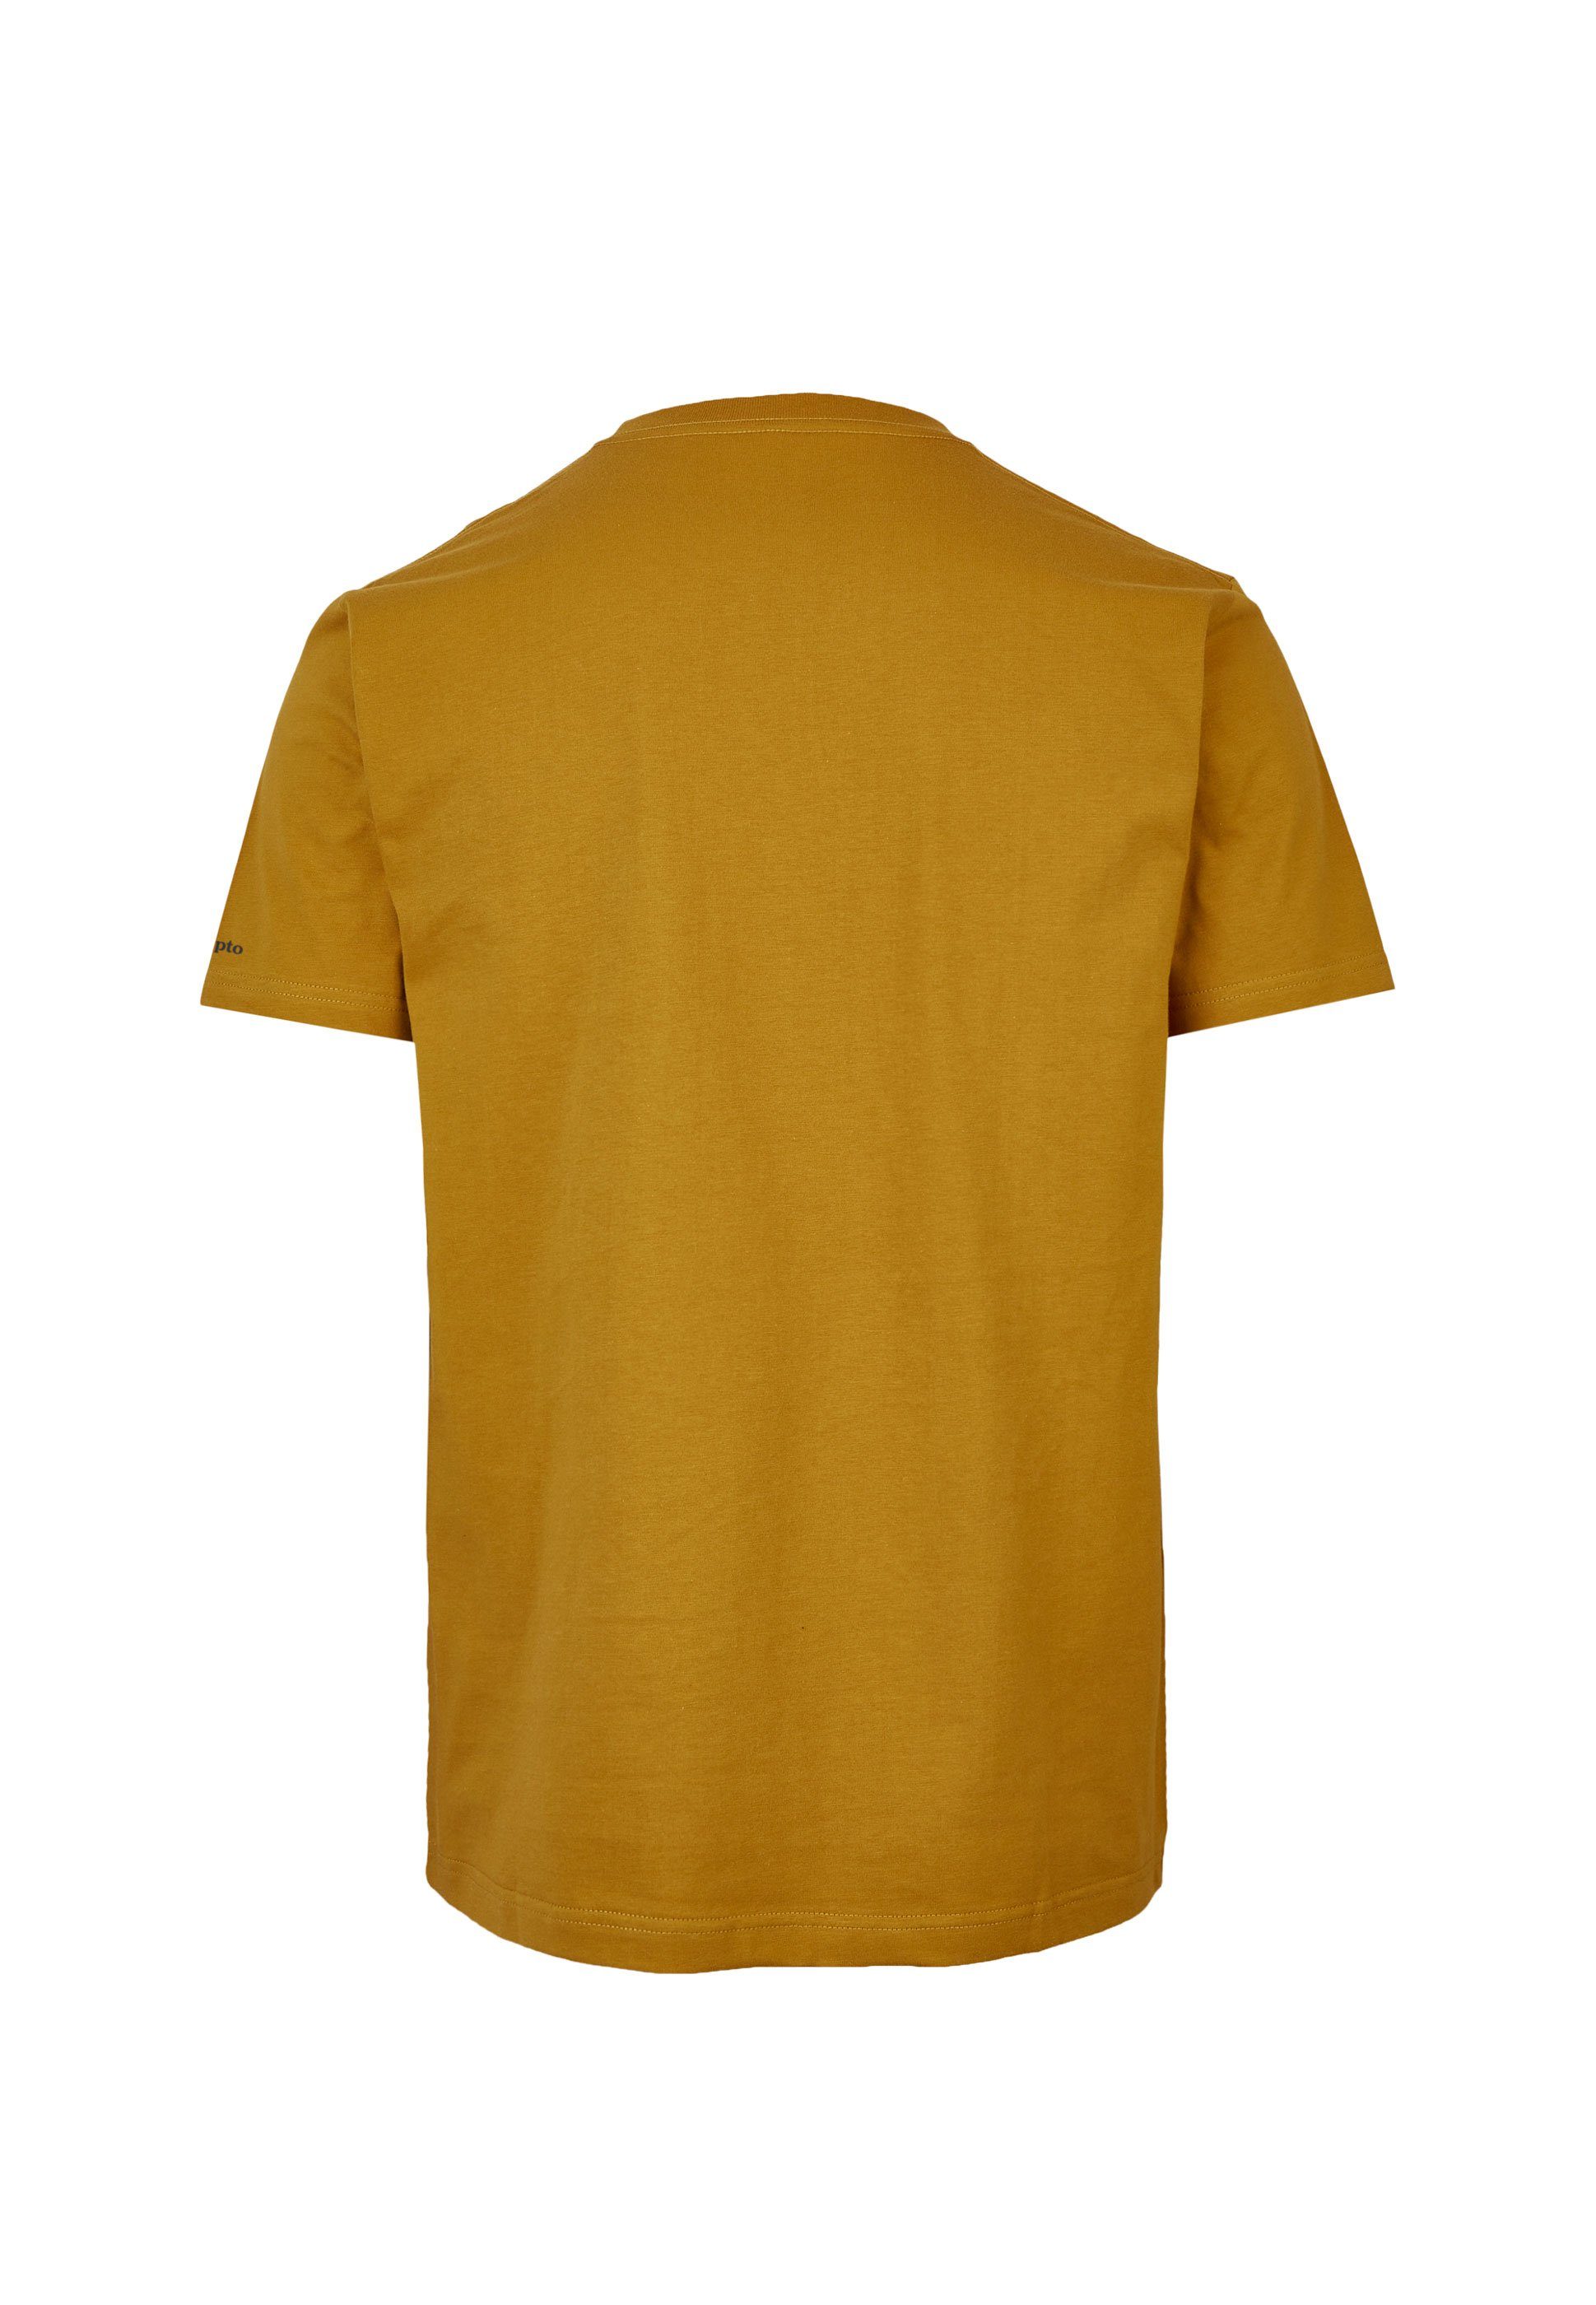 klassischem Cleptomanicx braun Print Mowe T-Shirt mit